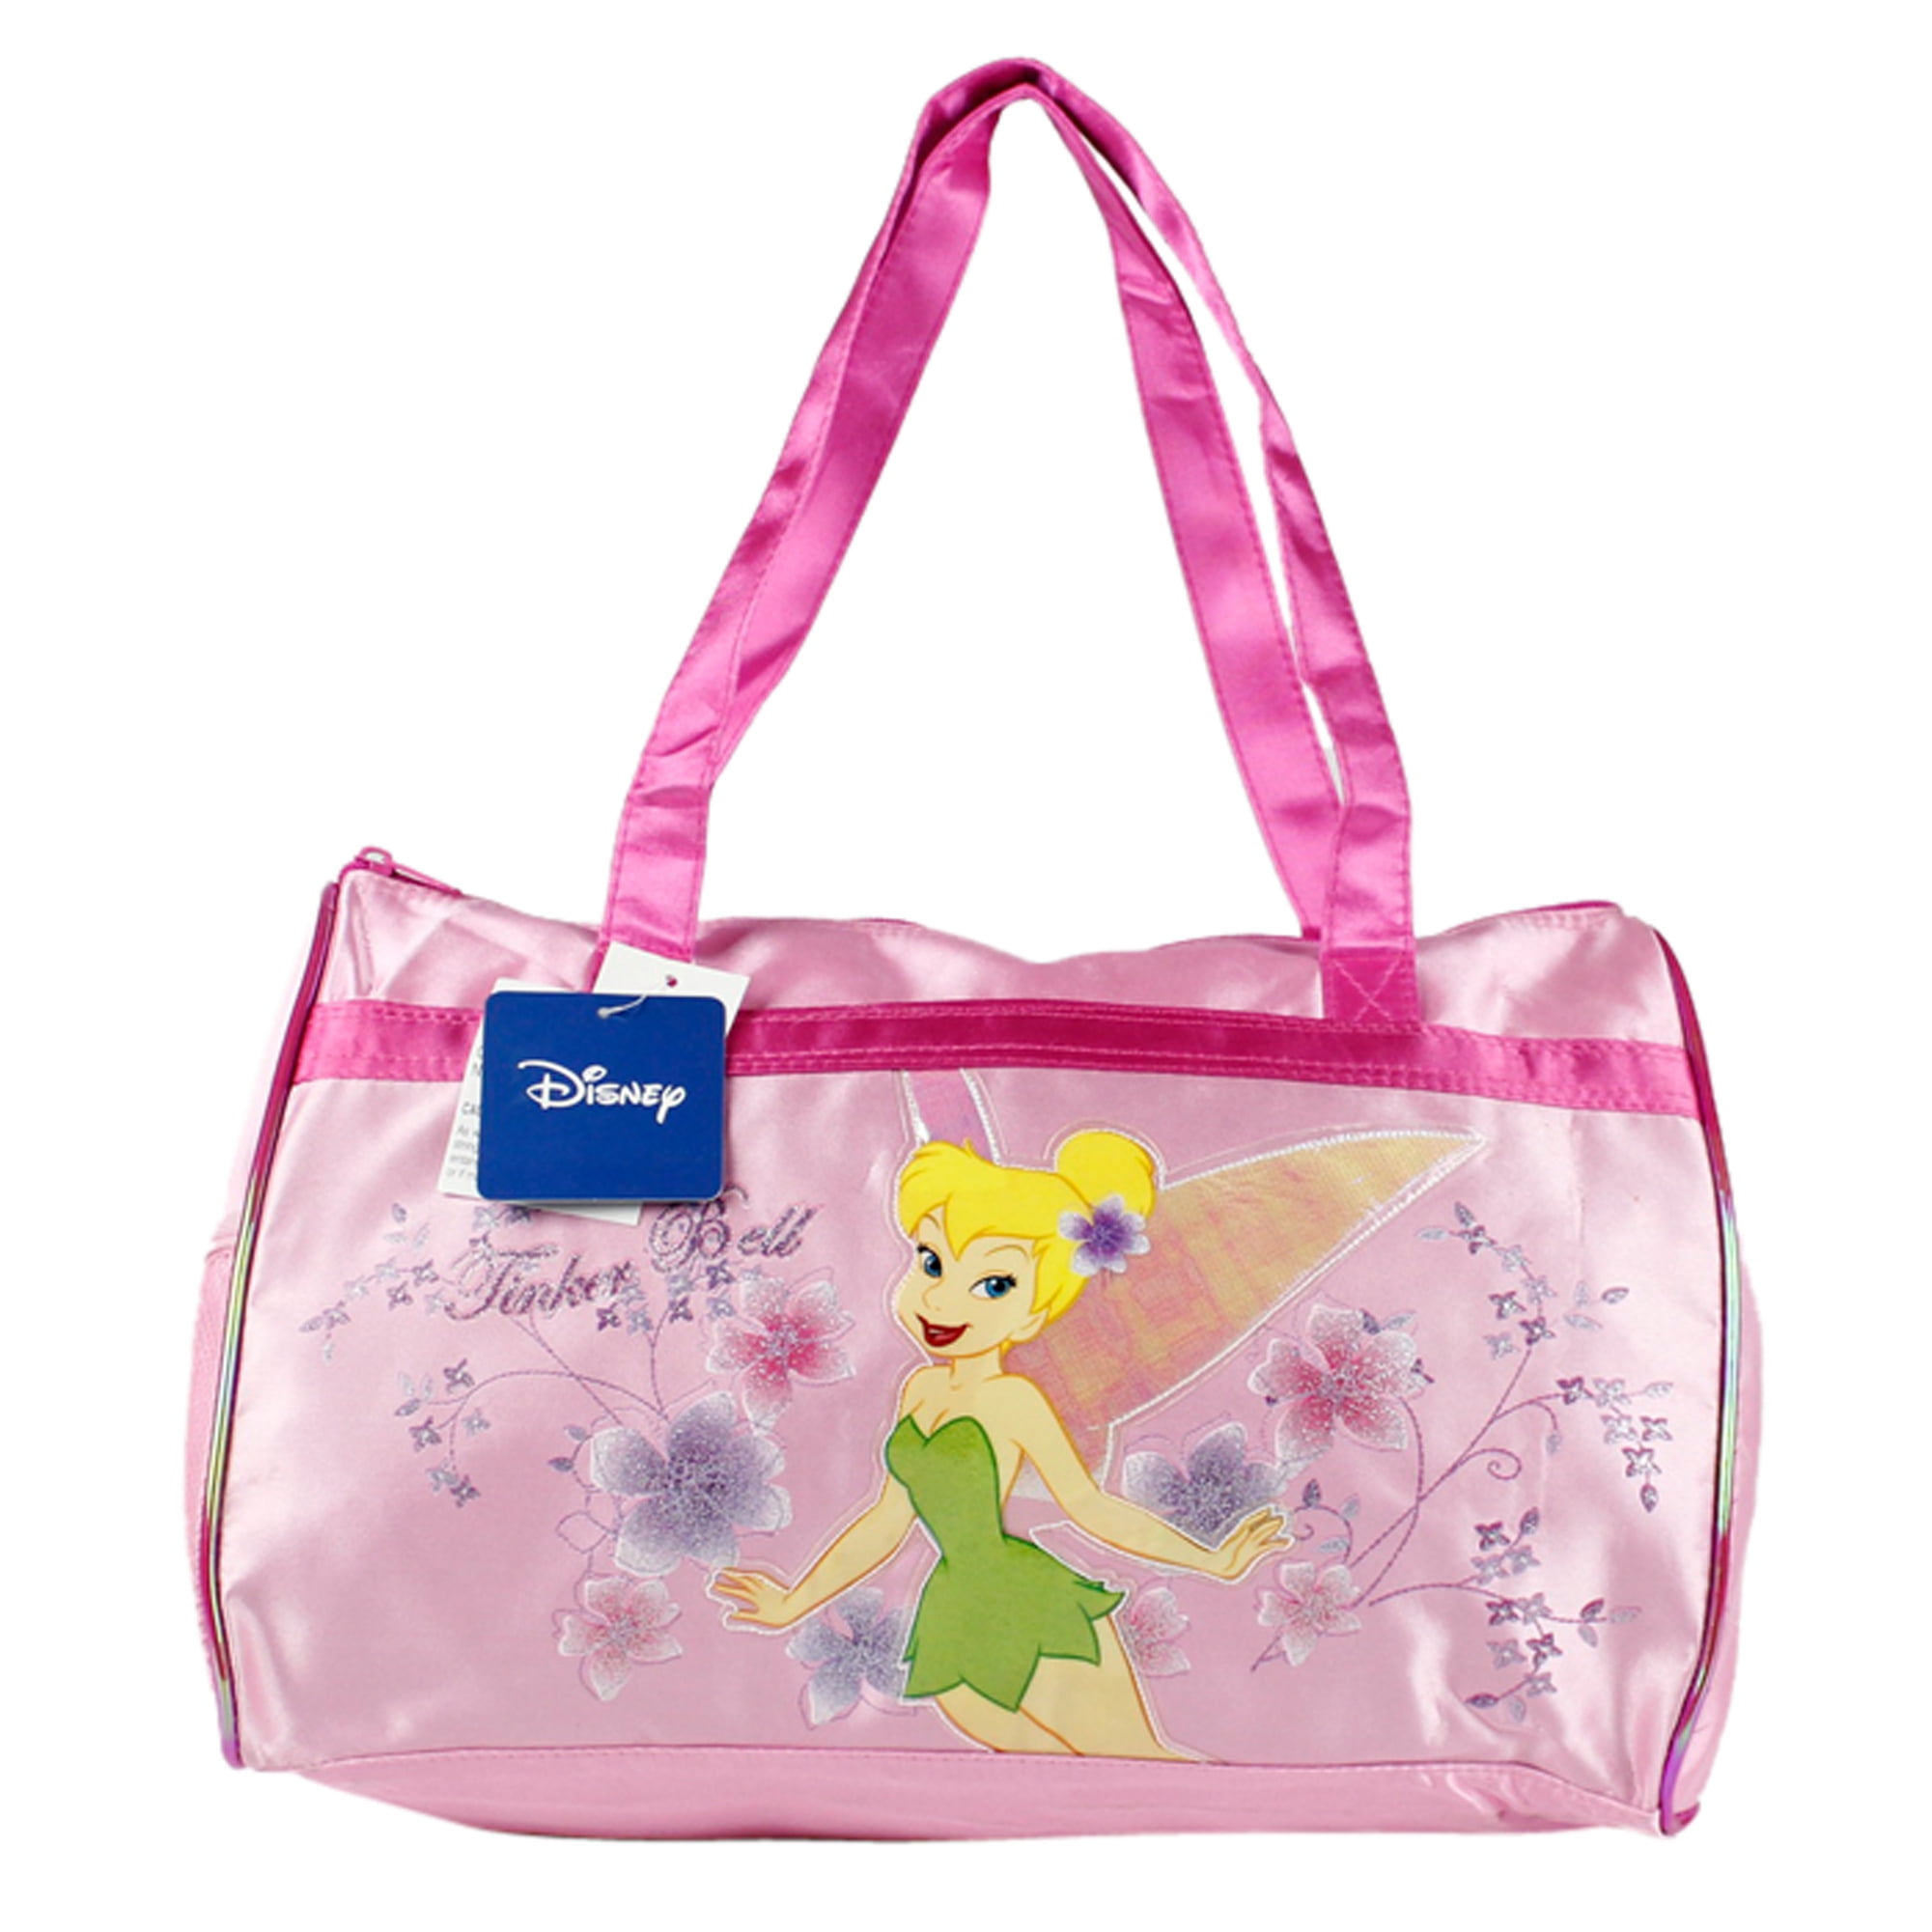 Pink Disney Tinkerbell Girls Large duffle Bag /Gym Bag/ Travel Bag 